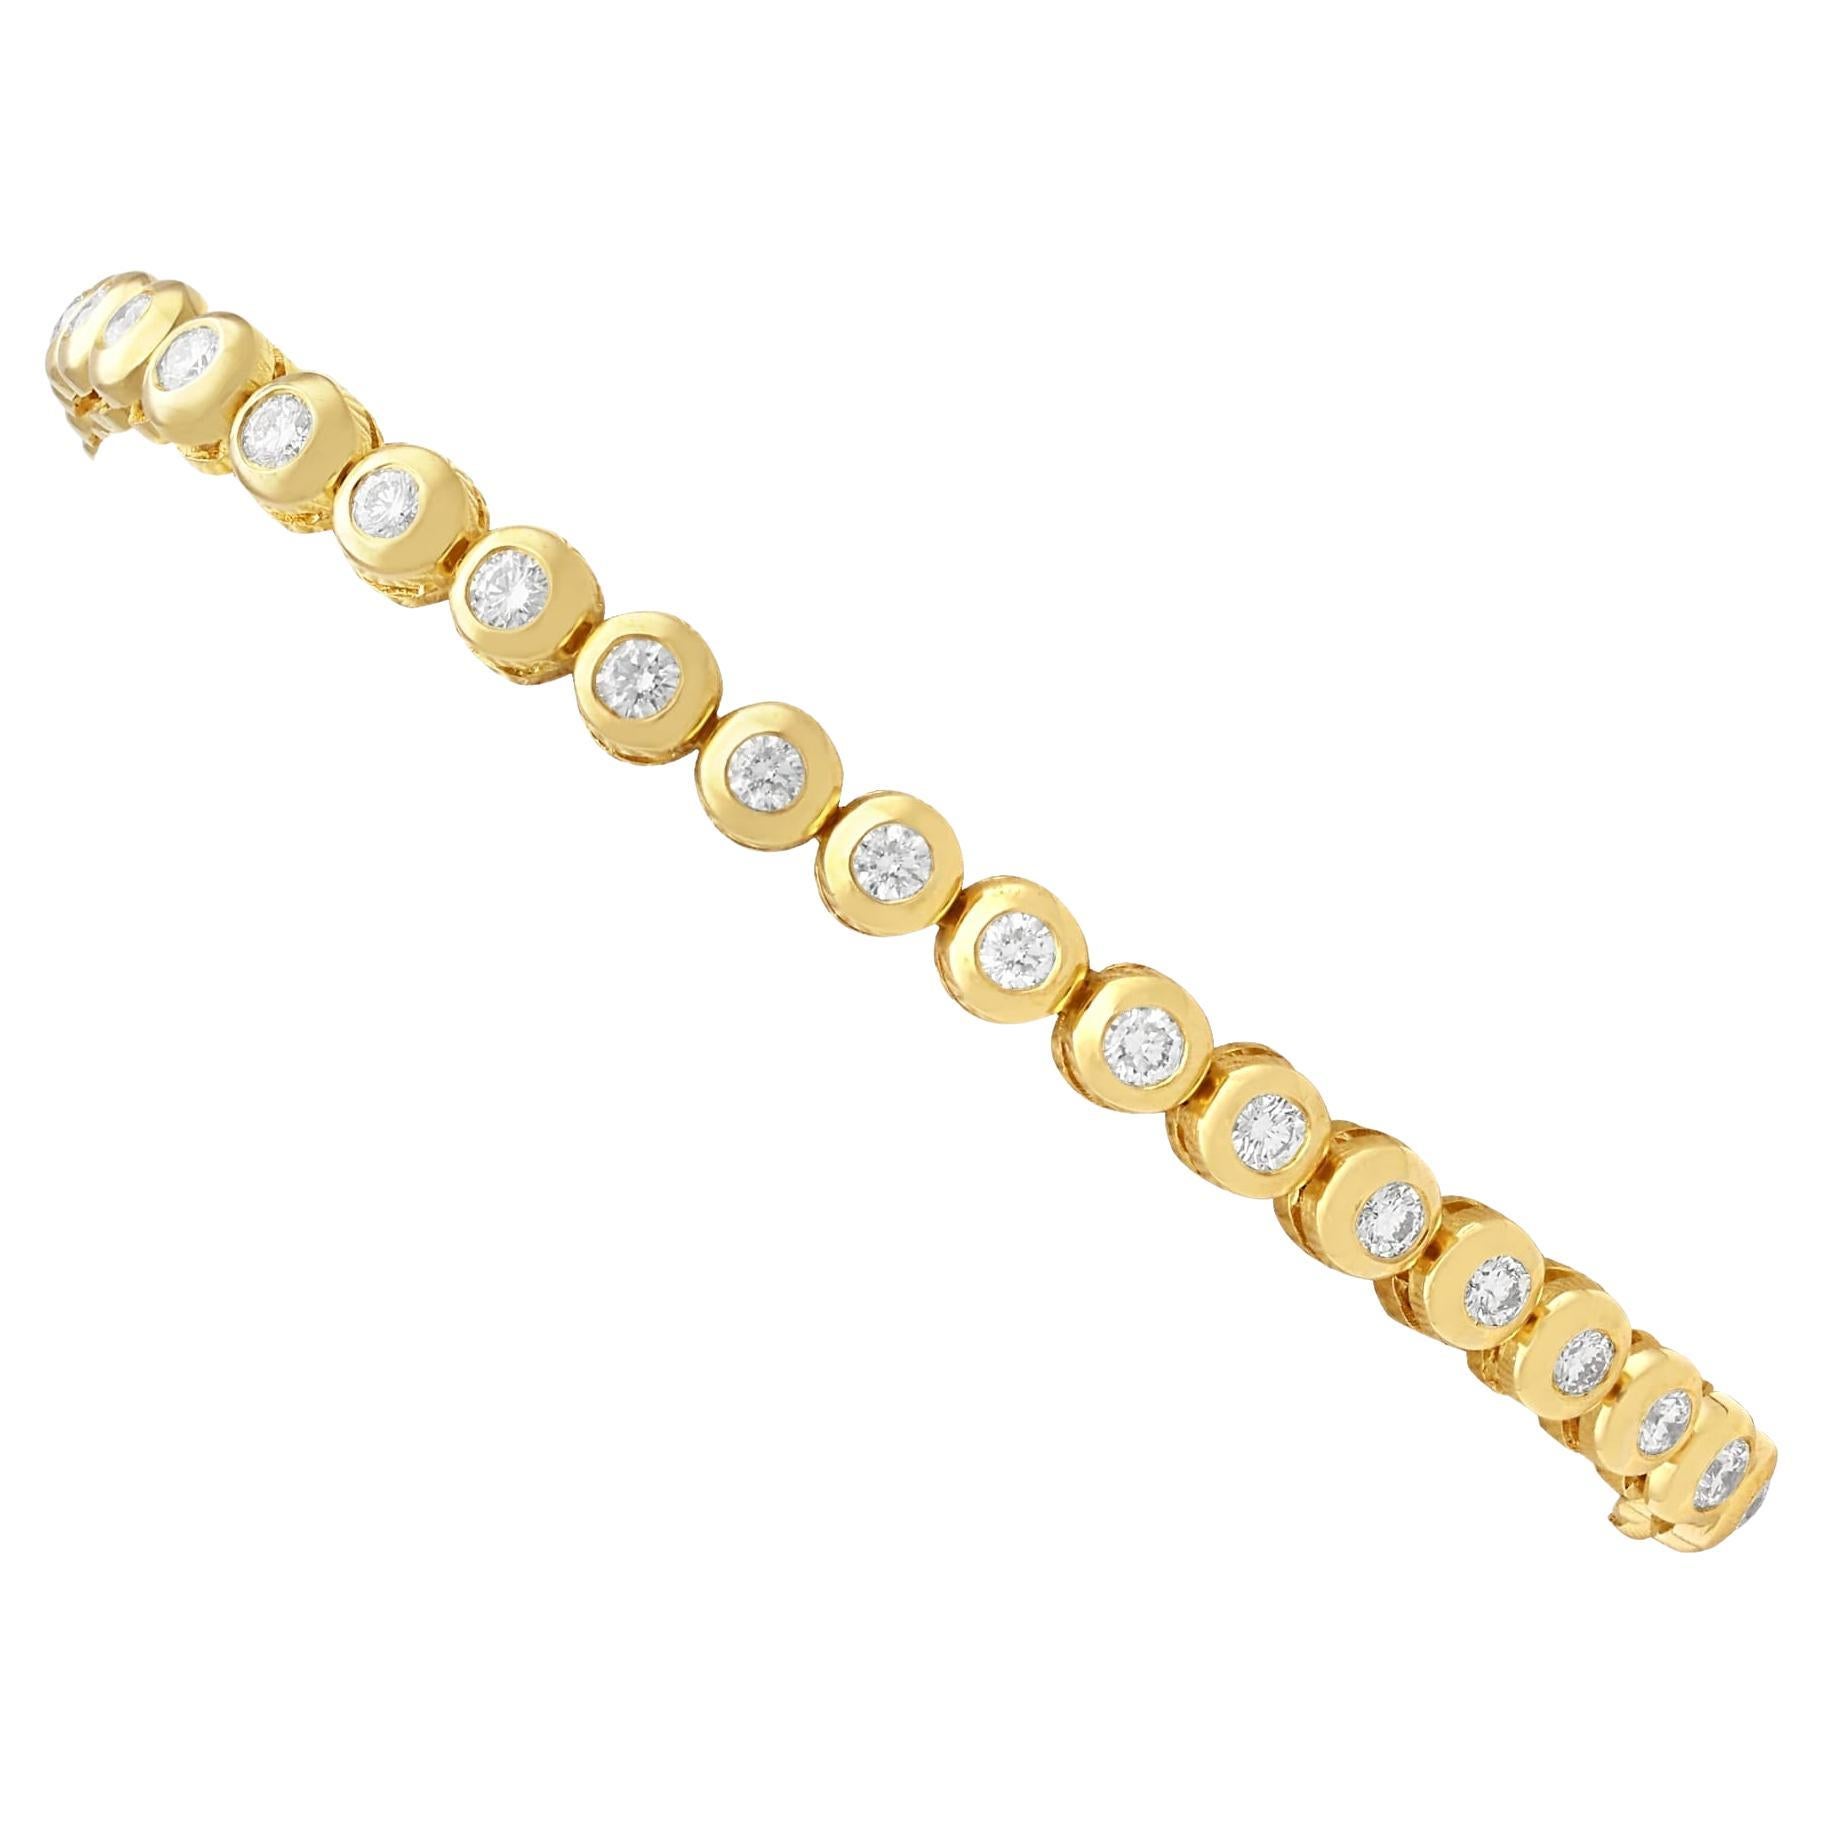 Vintage 2.25 Carat Diamond and 18k Yellow Gold Tennis Bracelet